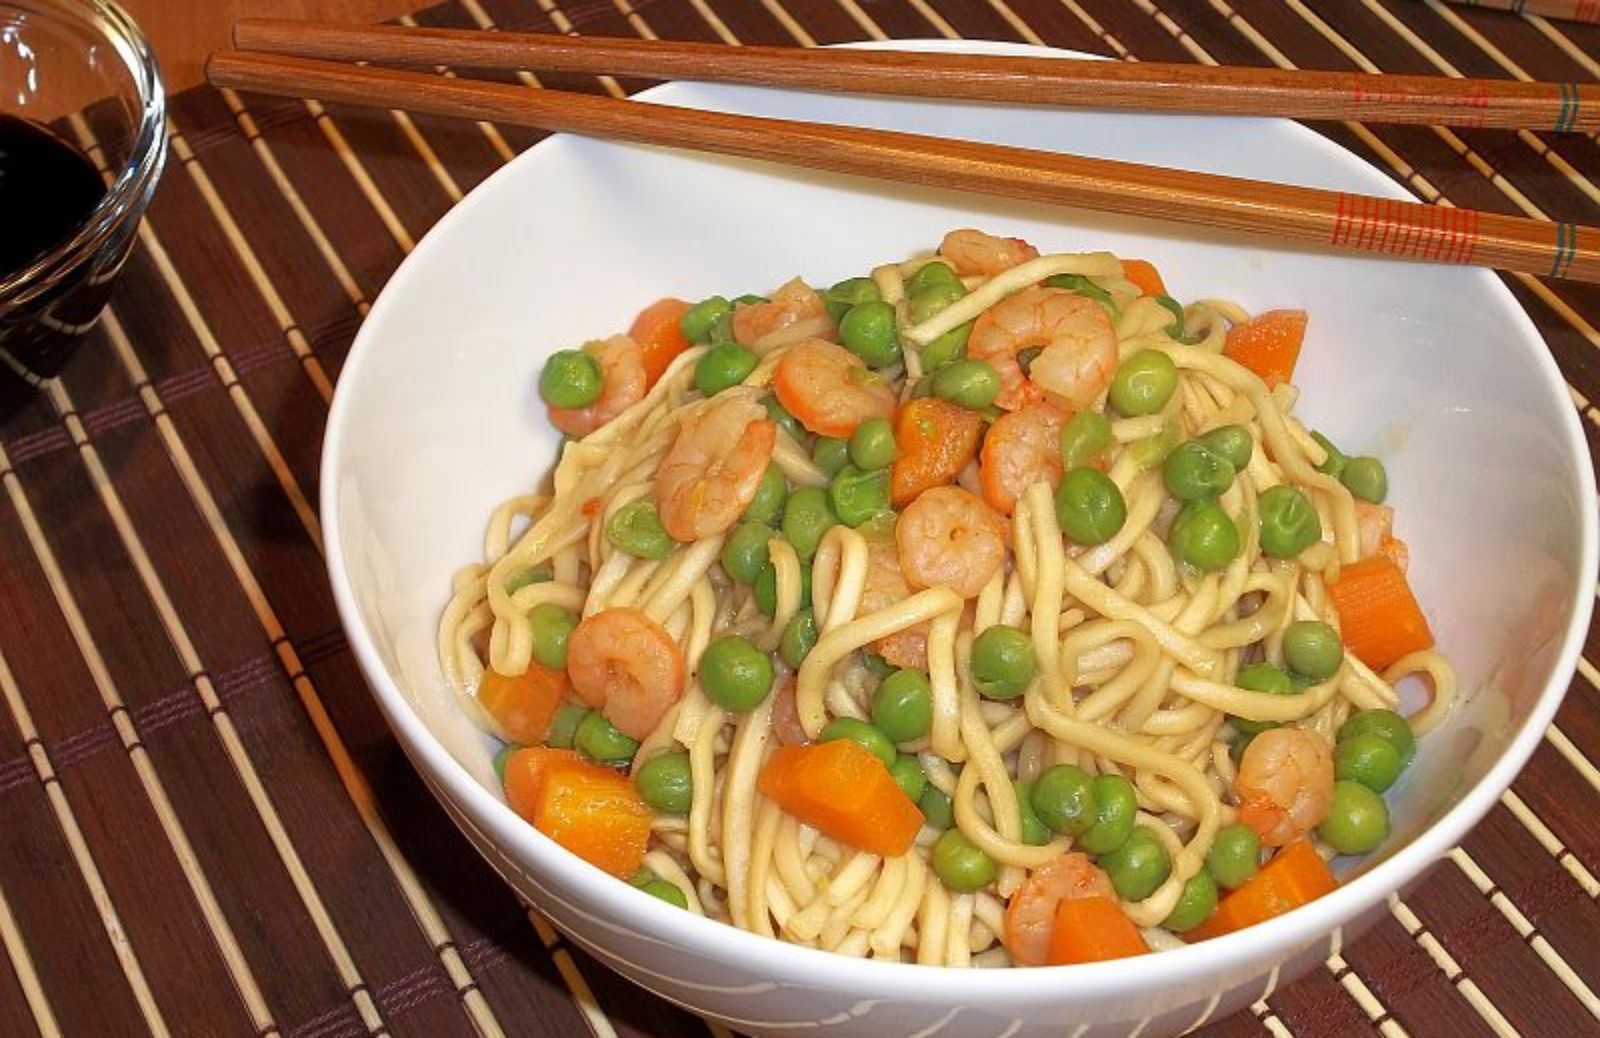 Asia in cucina: noodles con verdure e gamberetti